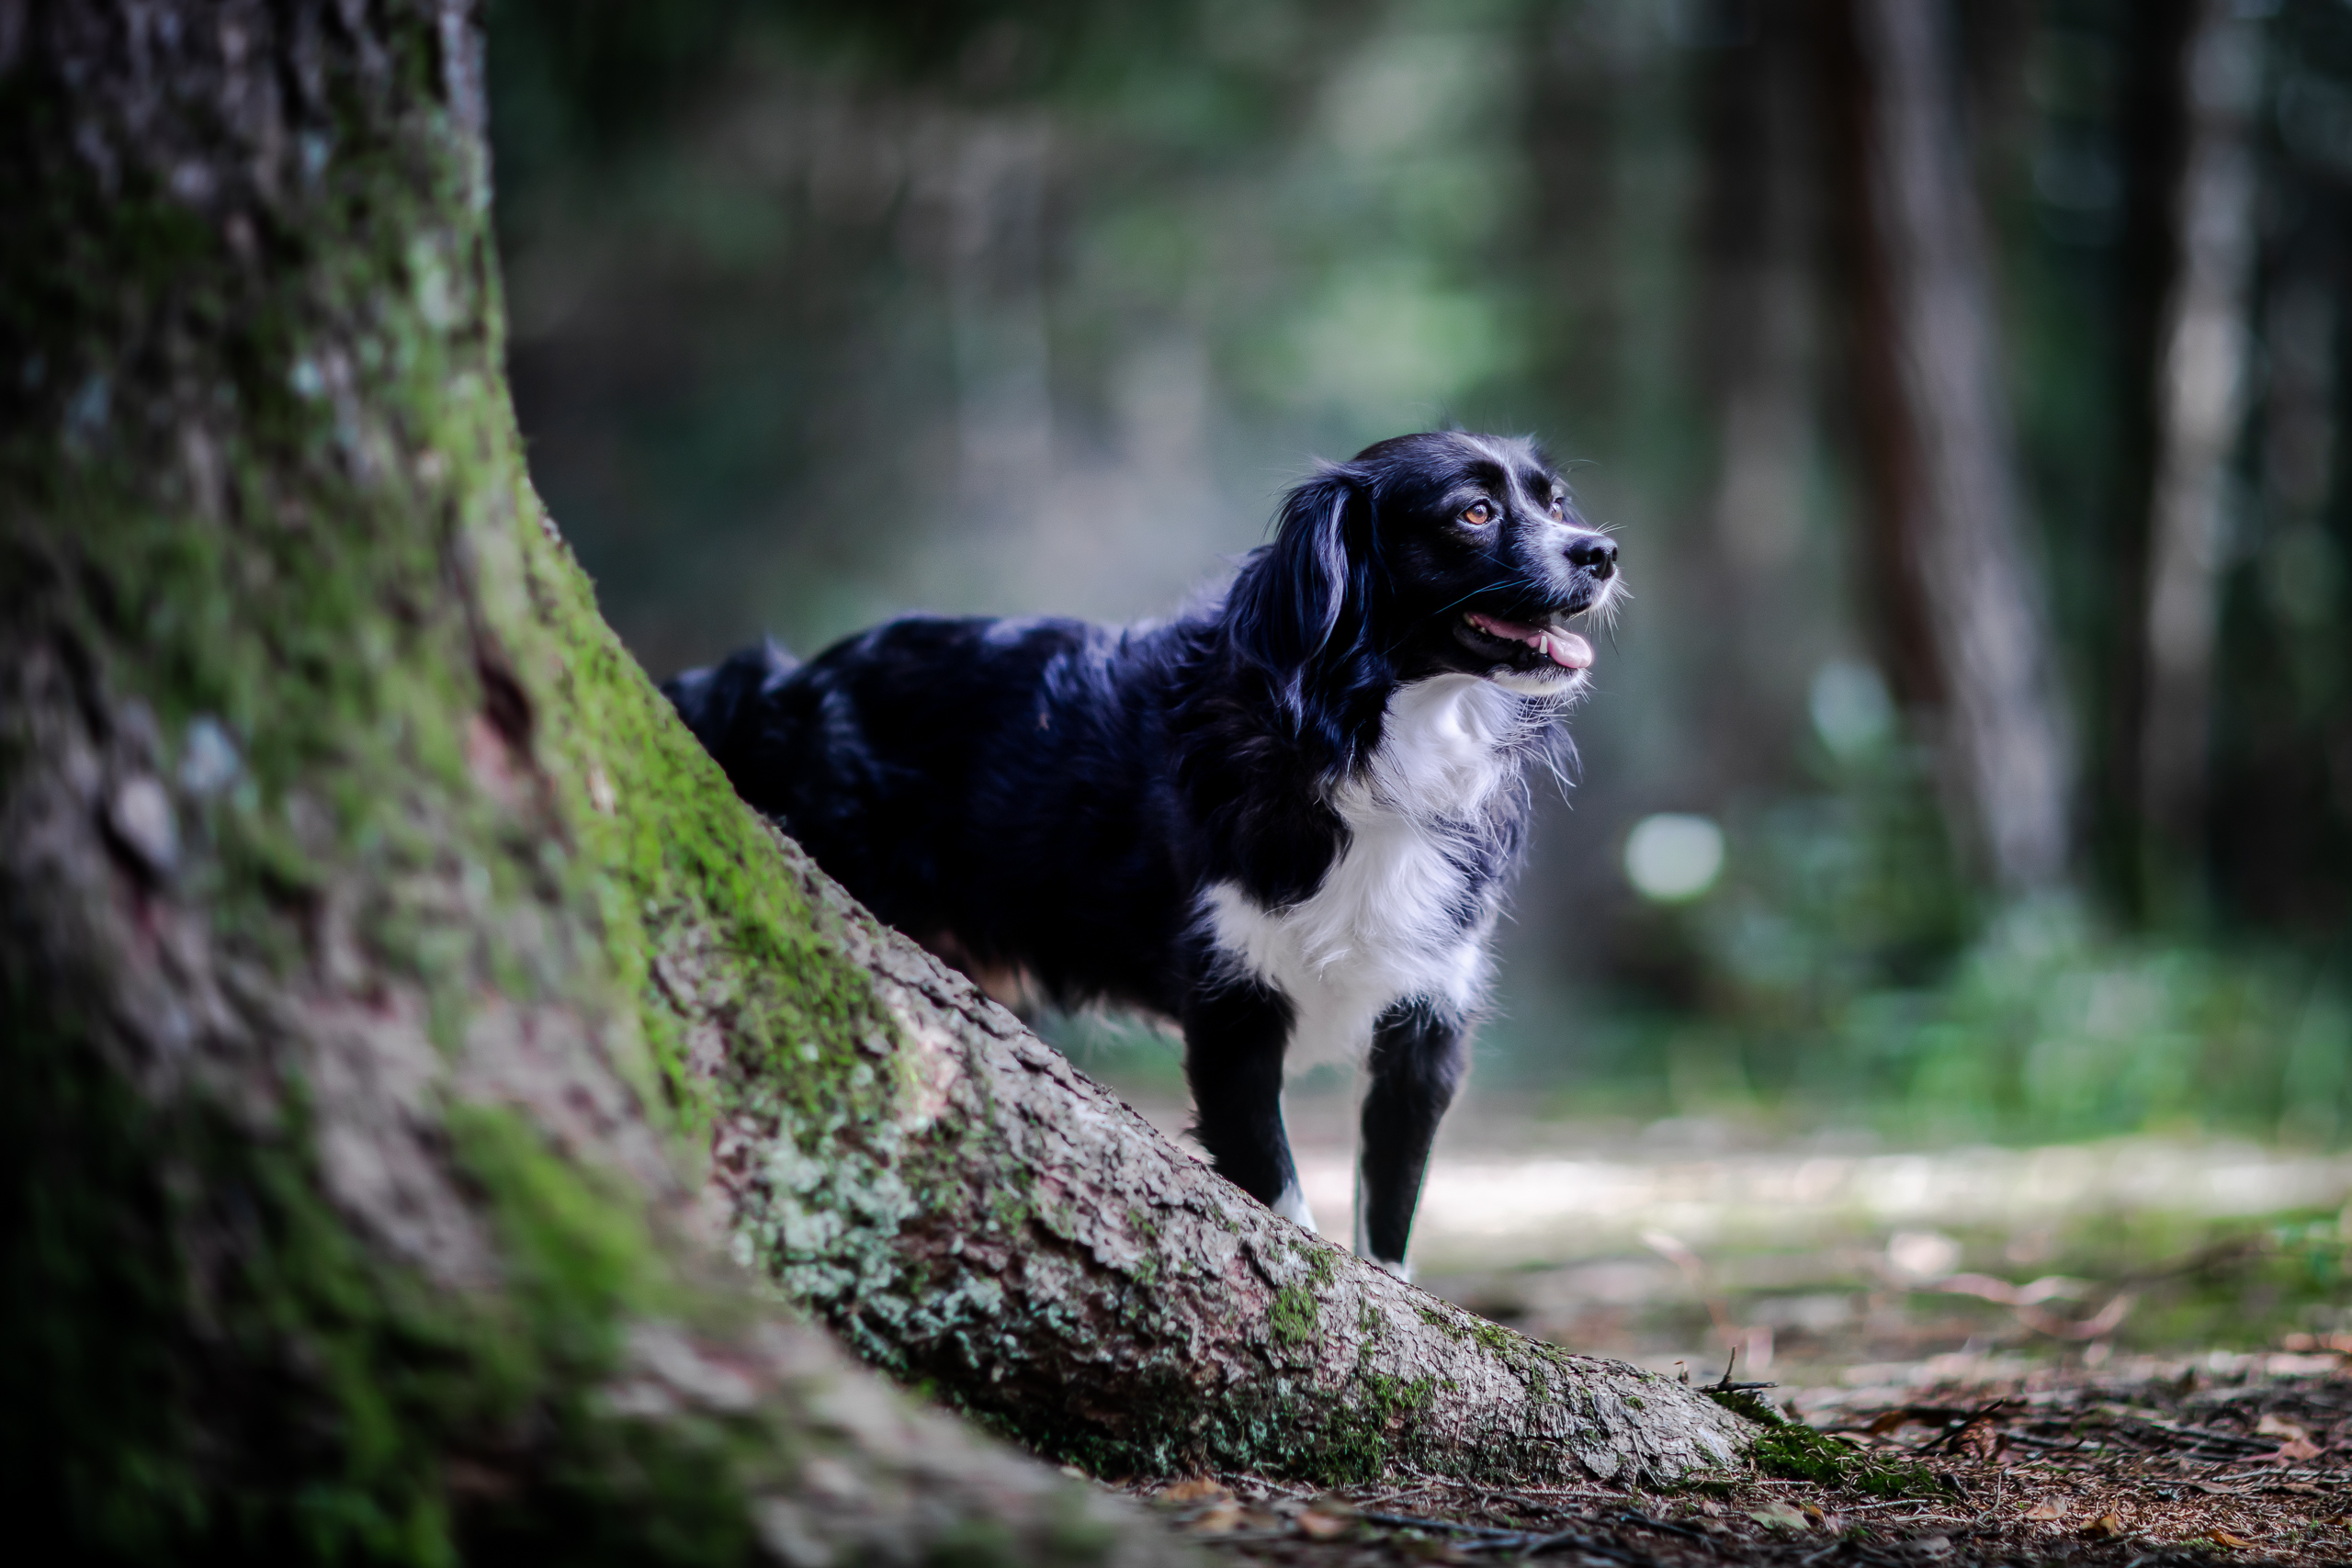 Chicco;Herbst;Hund;Portfolio;Tierfotografie;lumo obscura;outdoor